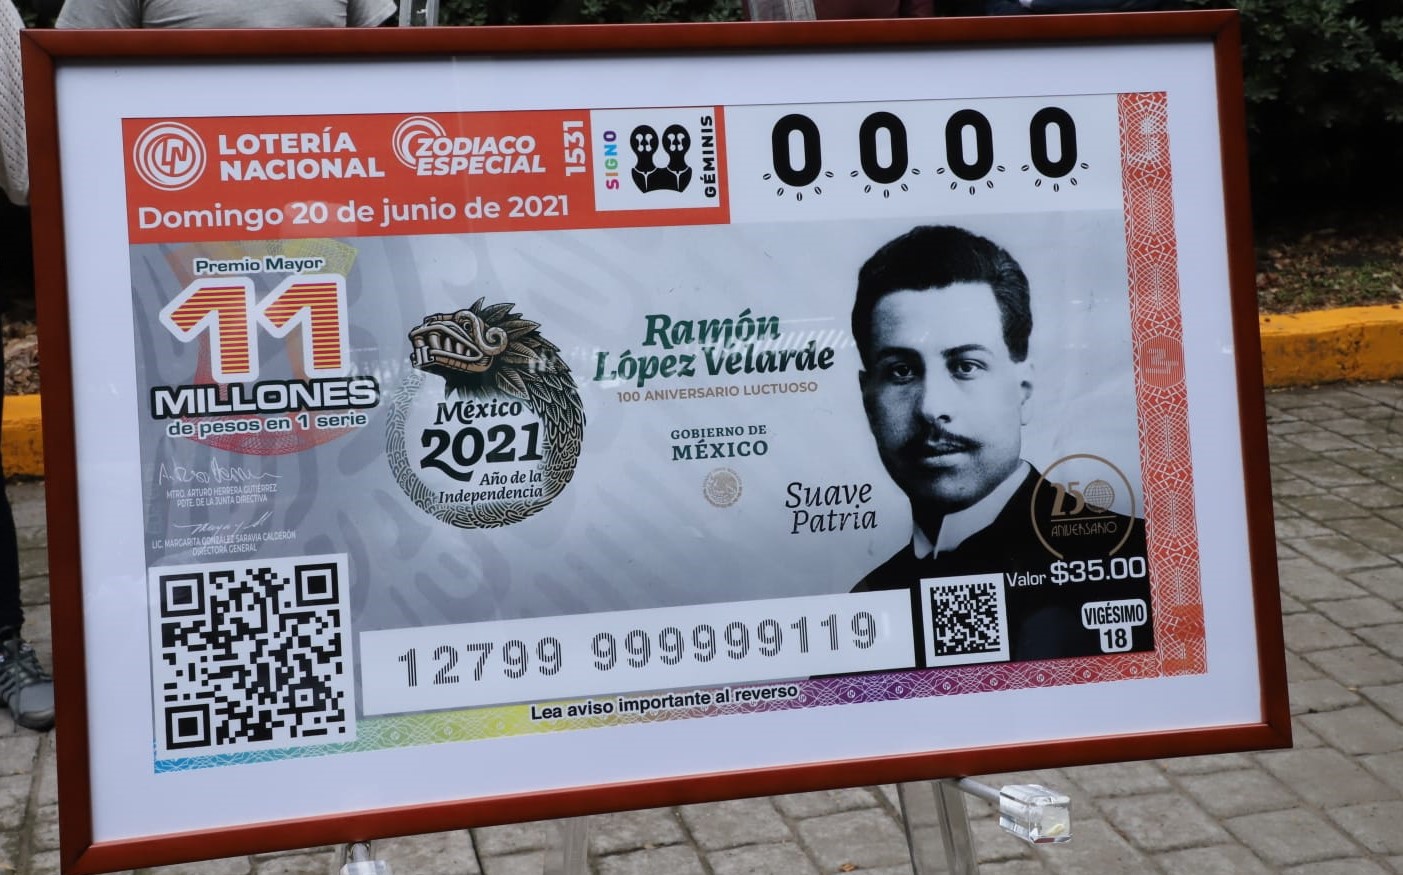 Develan billete de lotería en conmemoración a López Velarde